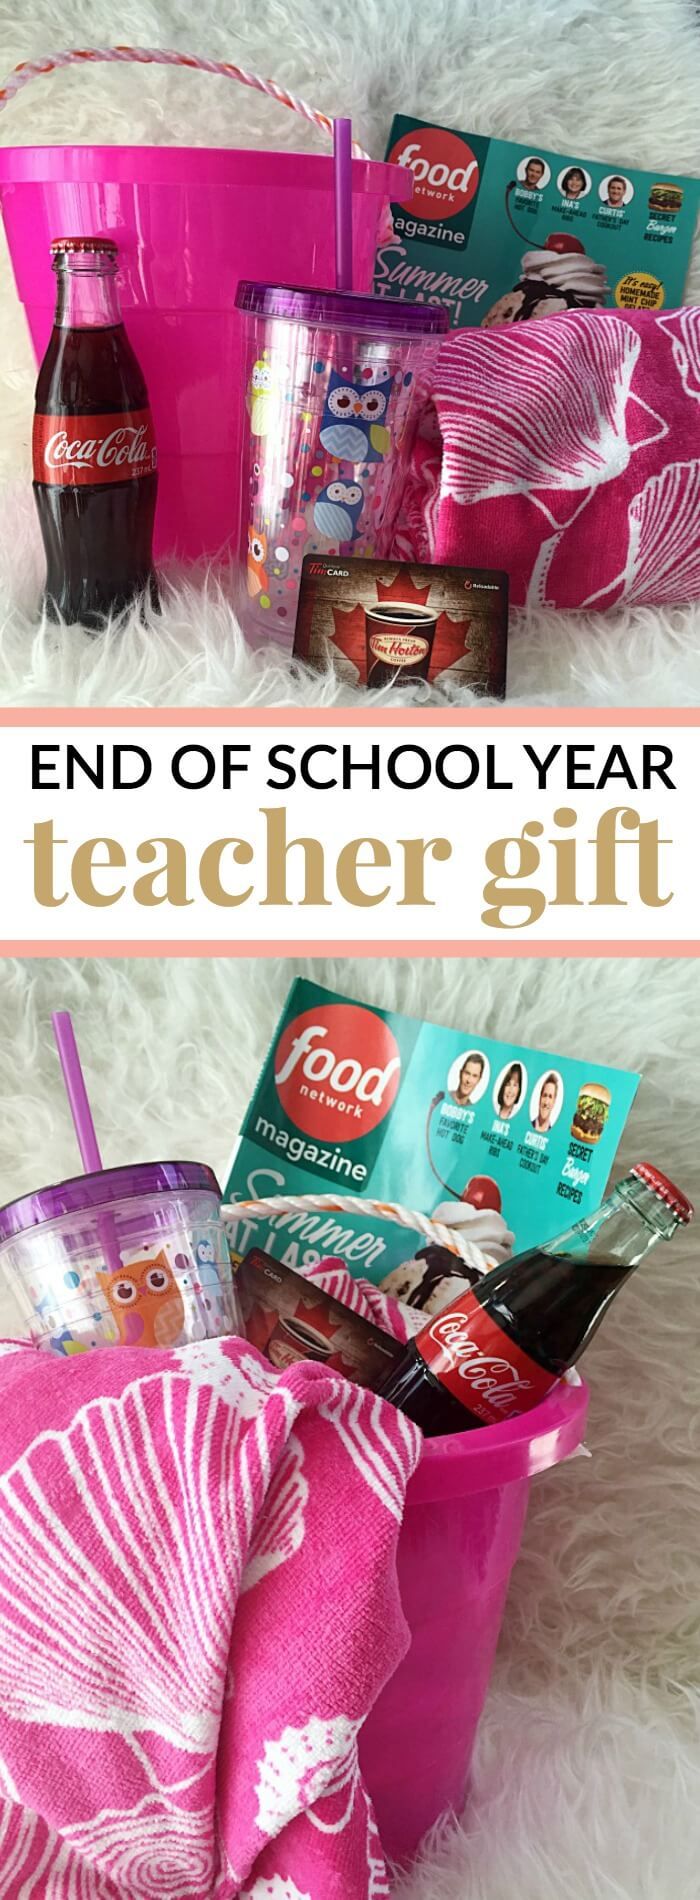 Teacher Gift Idea by Mommy Moment | Teacher Appreciation Gift Ideas that Rule!